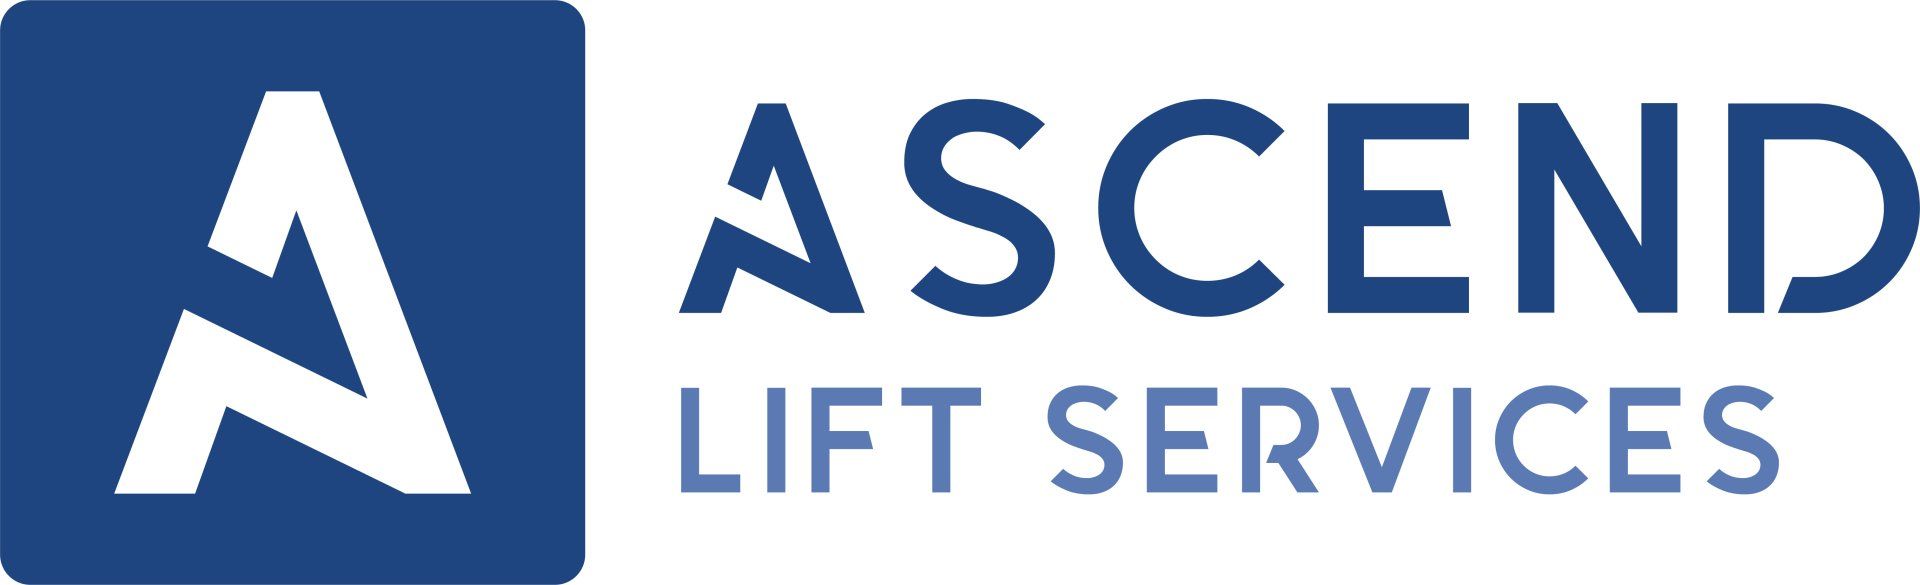 Ascend Lift Services company logo